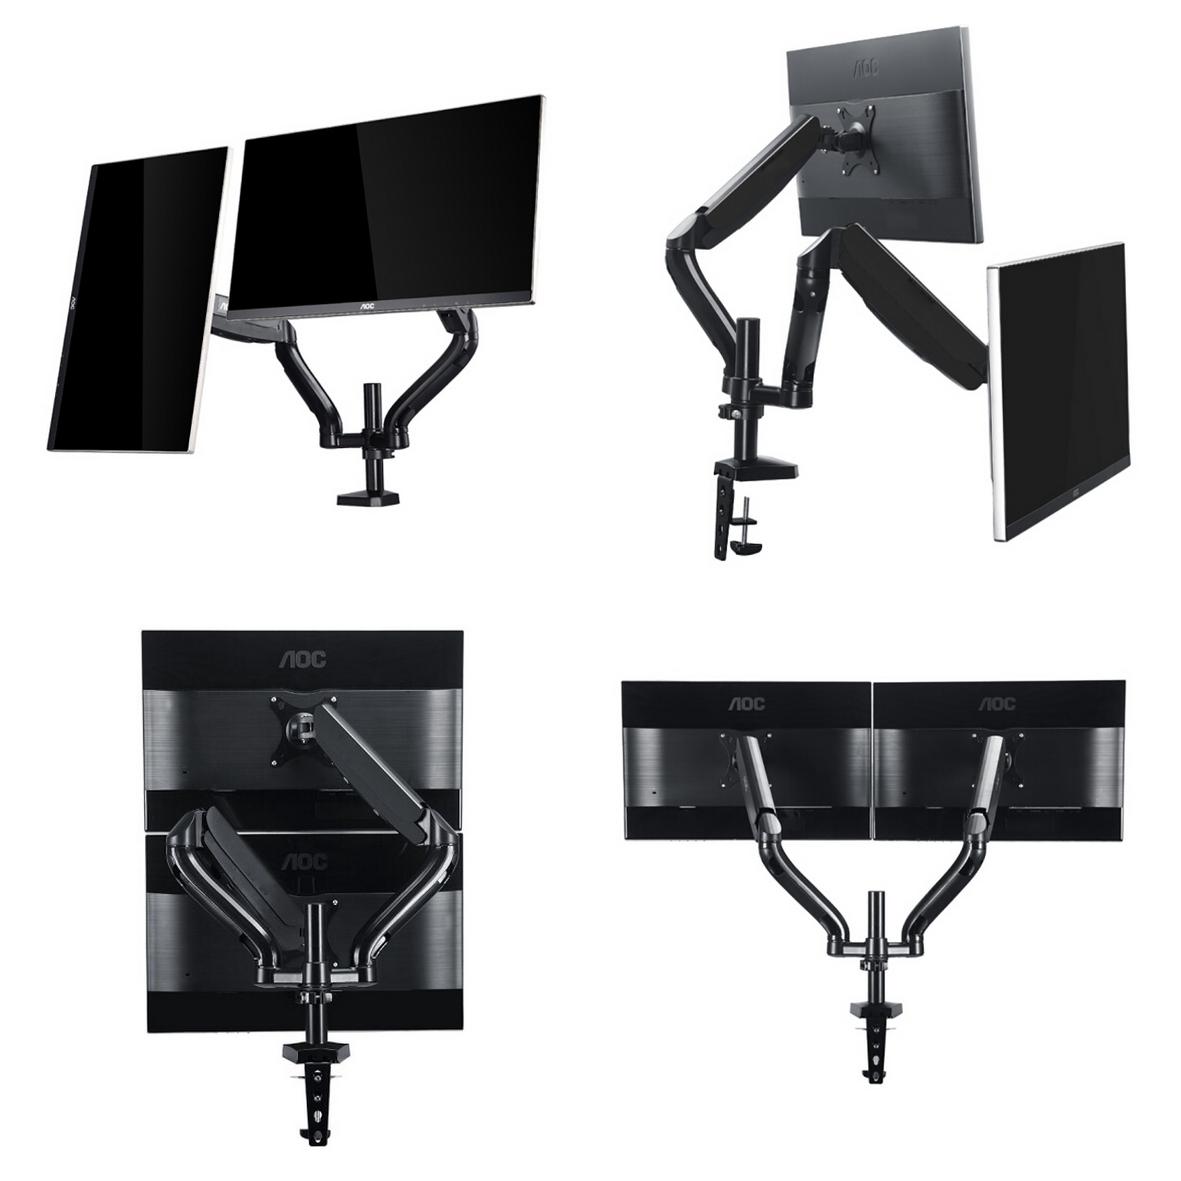 Selected image for COBALT Stoni nosač za dva monitora ili laptopa sa USB hub-om